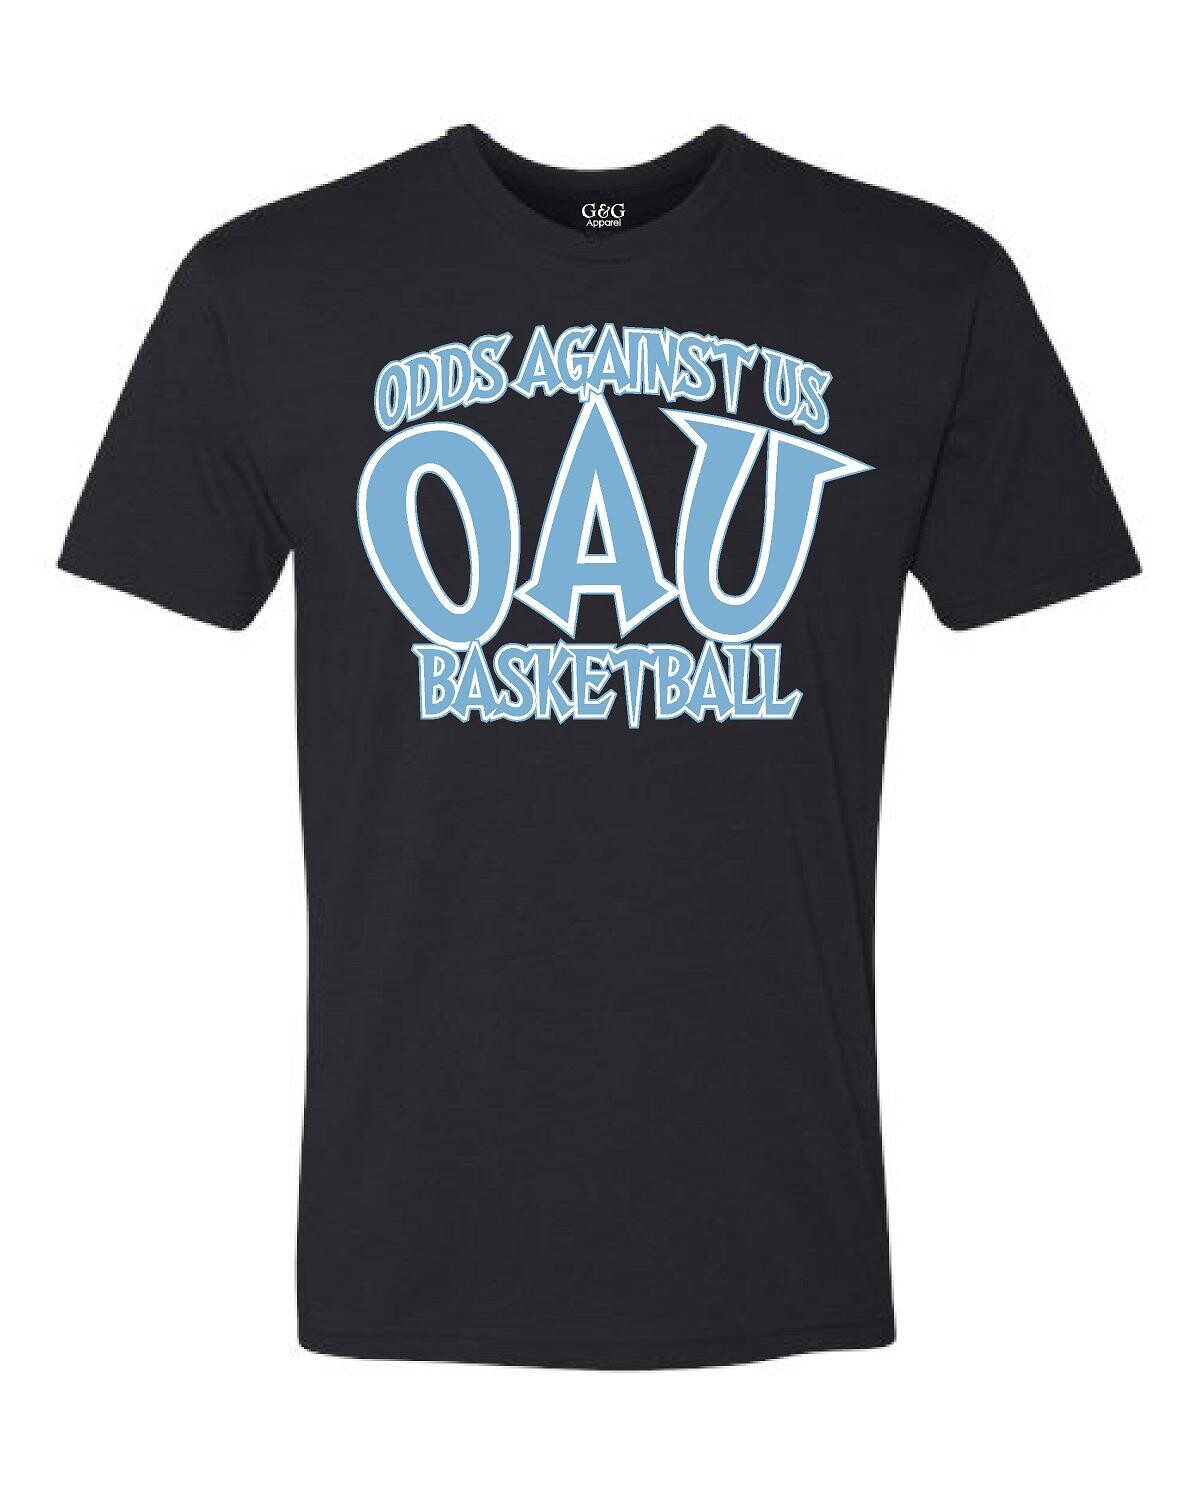 OAU Basketball Unisex Youth & Adult Premium Soft Cotton T-Shirt